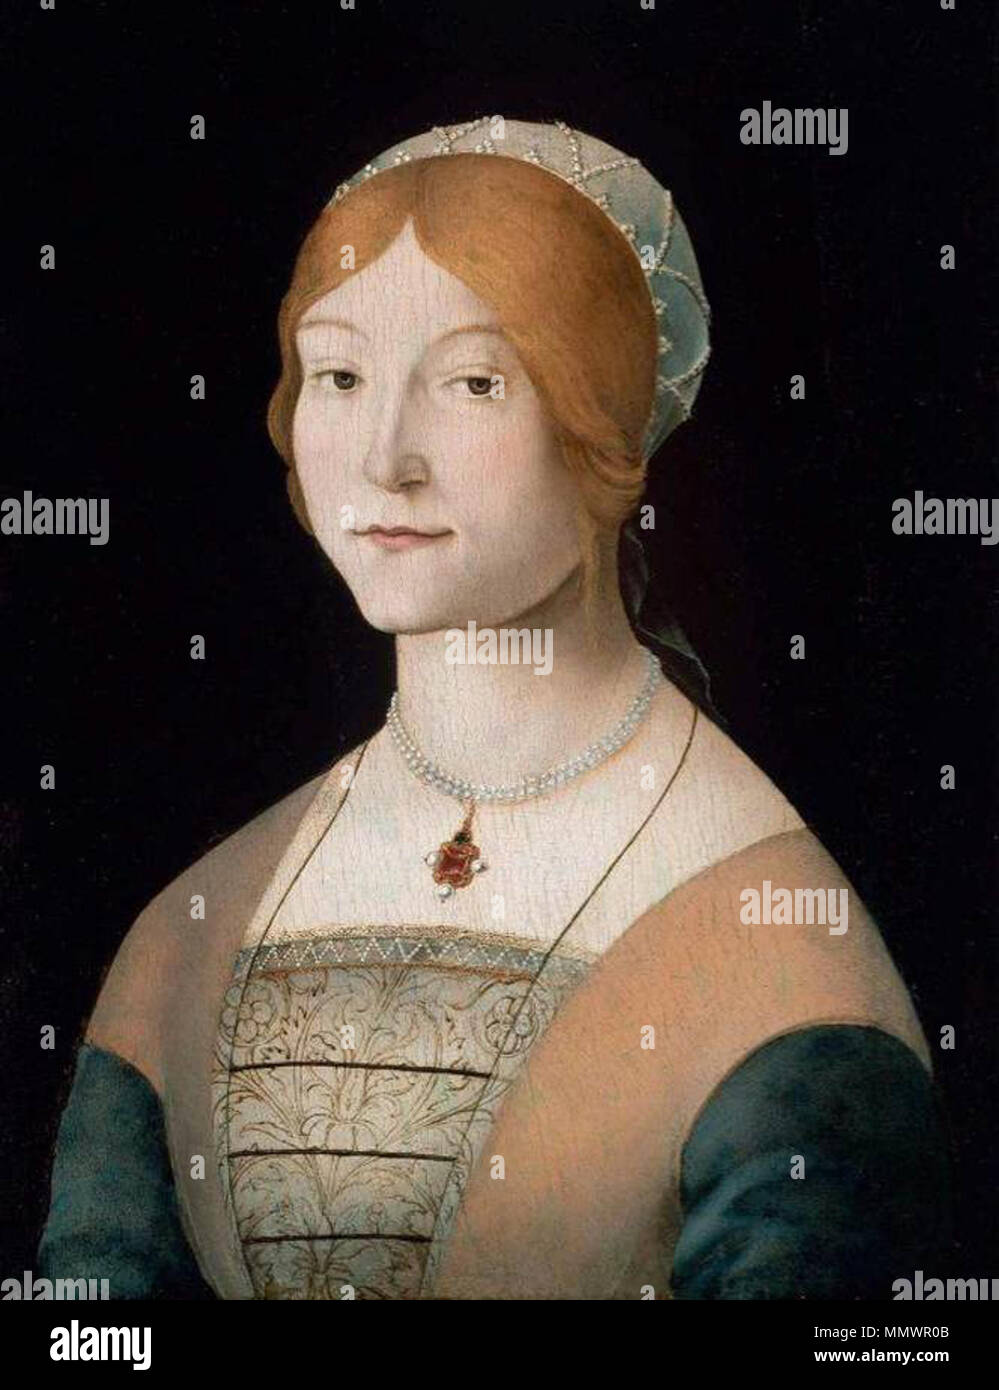 L'Italien : Ritratto di donna con Collana di perle Portrait d'une femme avec un collier de perle. Probablement 1485-1495. Lorenzo Costa - Portrait d'une femme avec un collier de perle - WGA5433 Banque D'Images